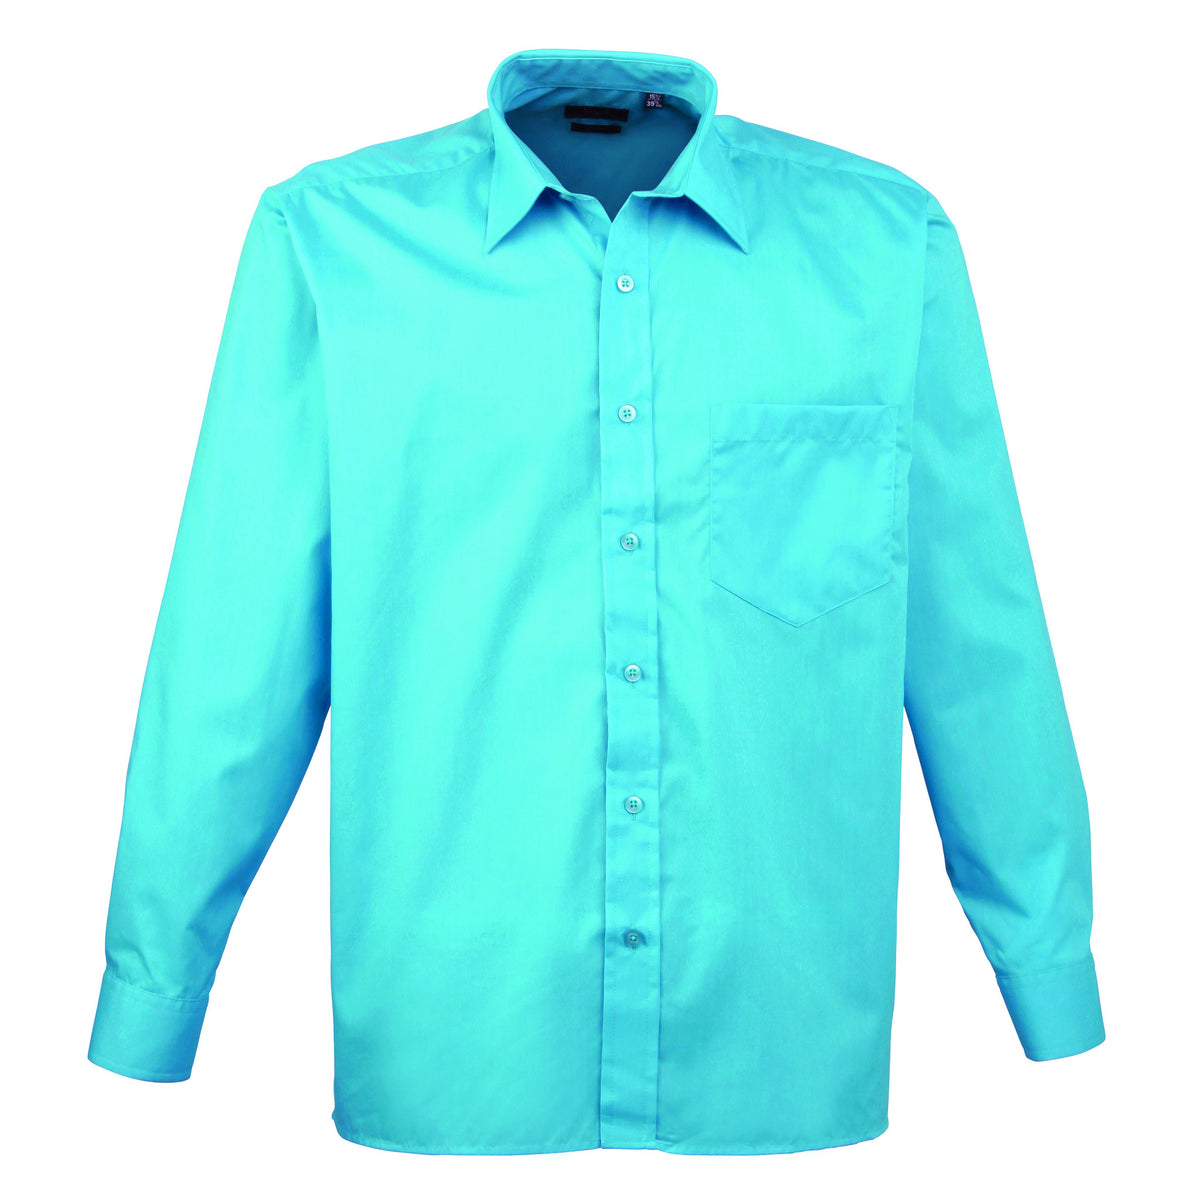 Premier Poplin Shirts (Sapphire, Turquoise, Light Blue, Mid Blue, Royal) - peterdrew.com
 - 8